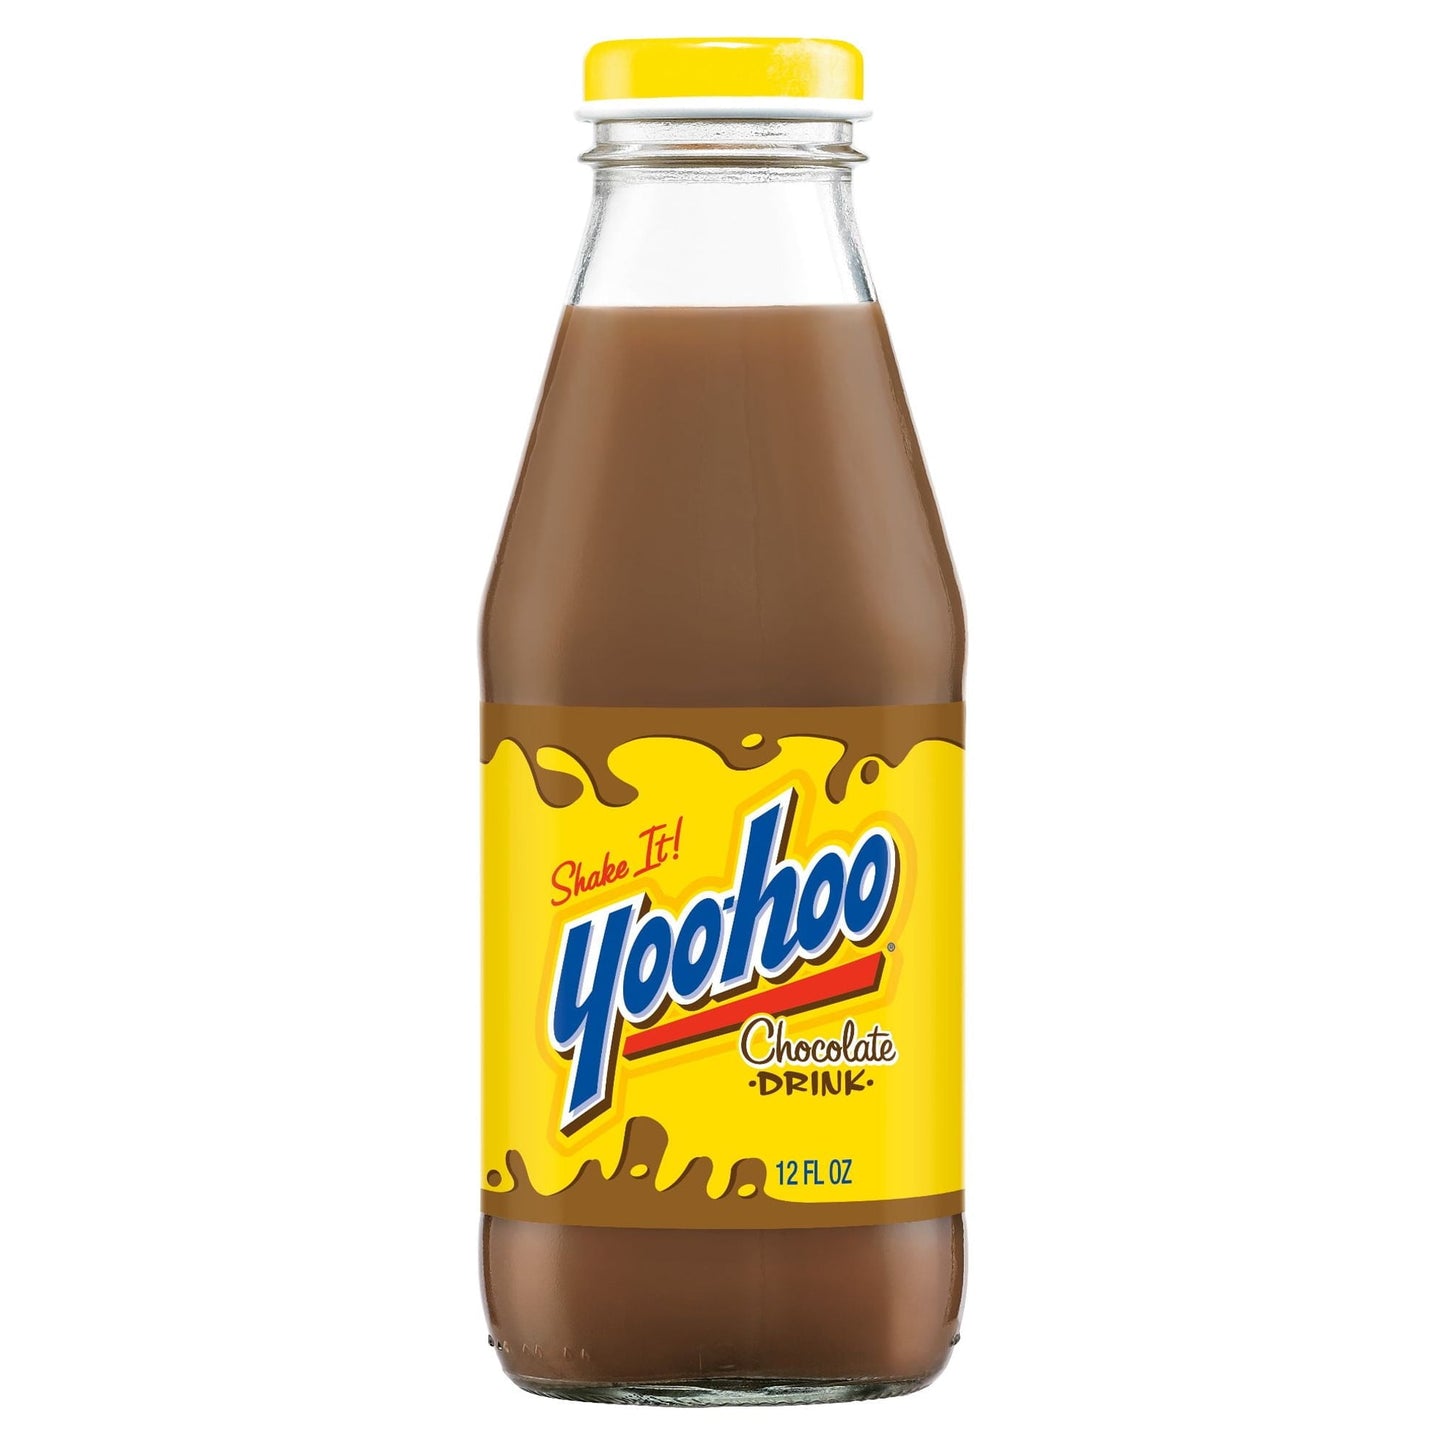 Yoo-hoo Chocolate Drink, 12 fl oz glass bottles, 4 pack